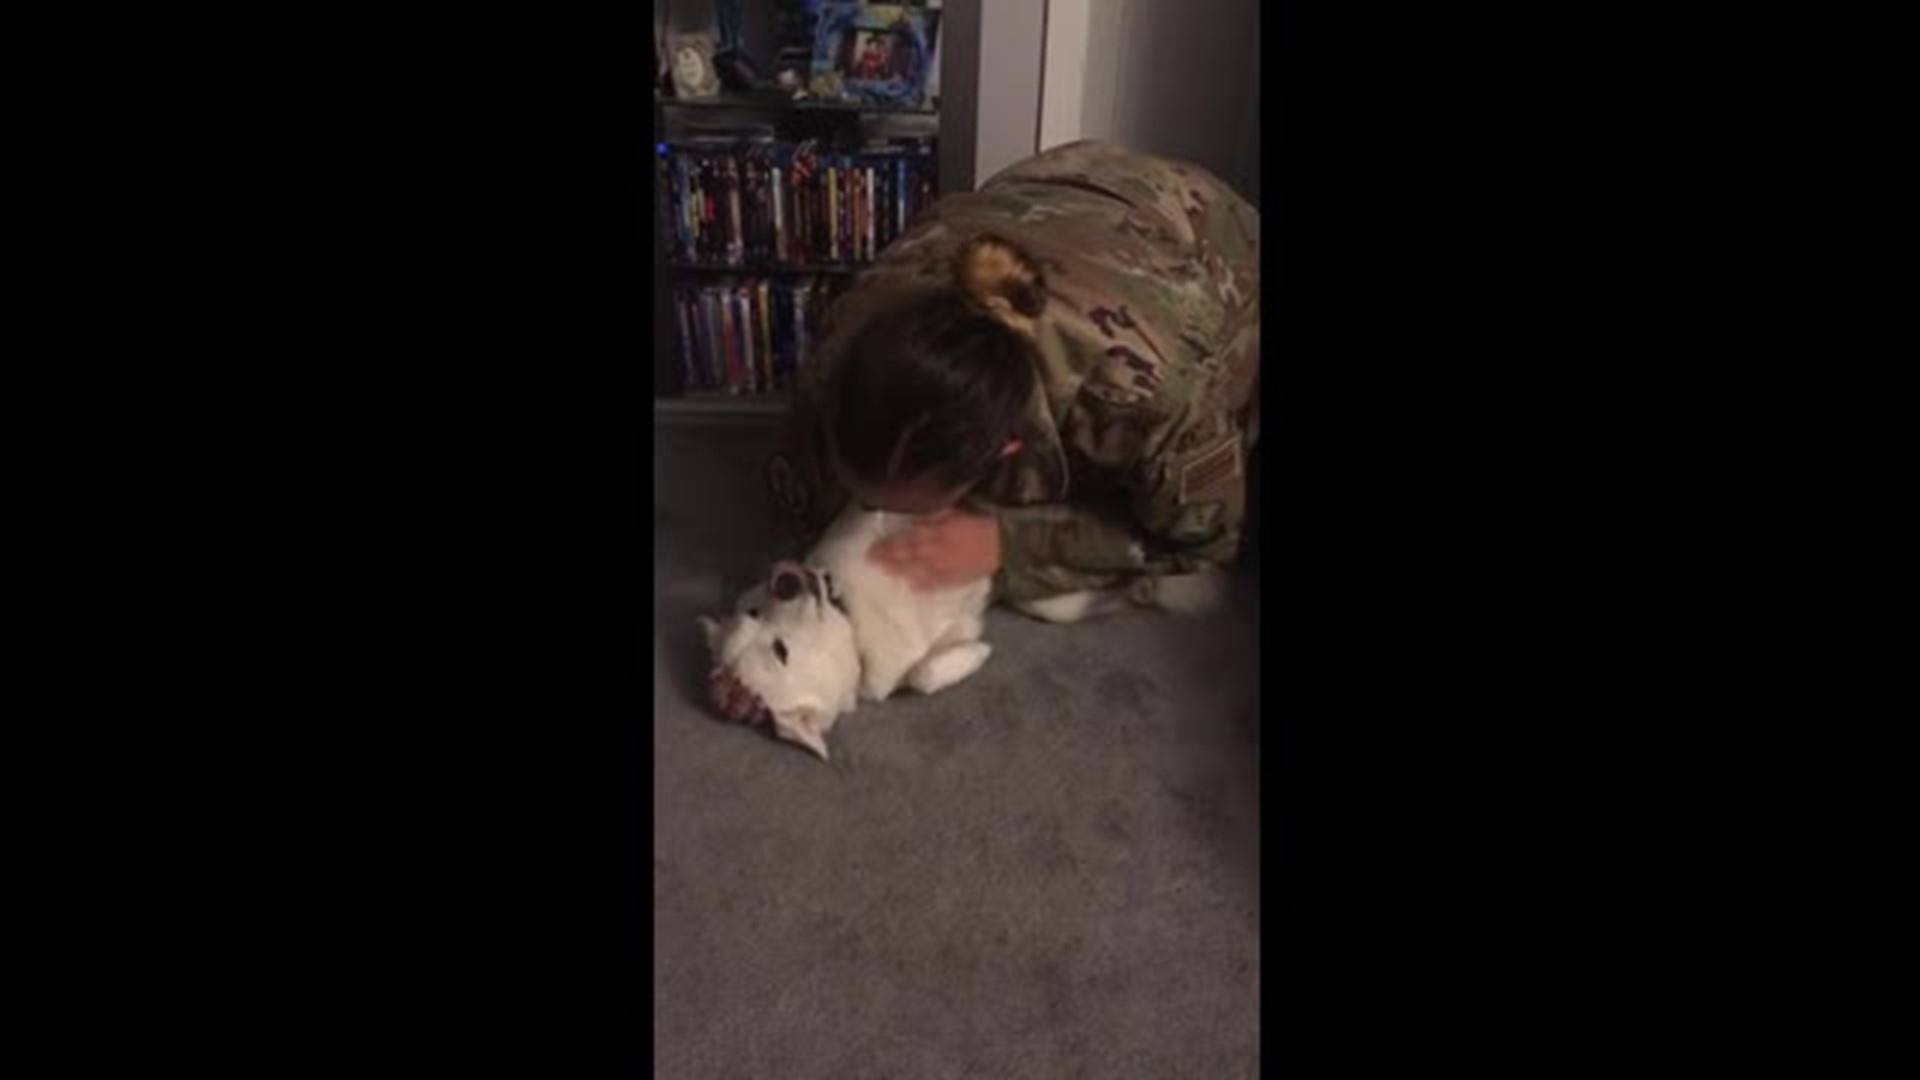 Dog reunites with owner